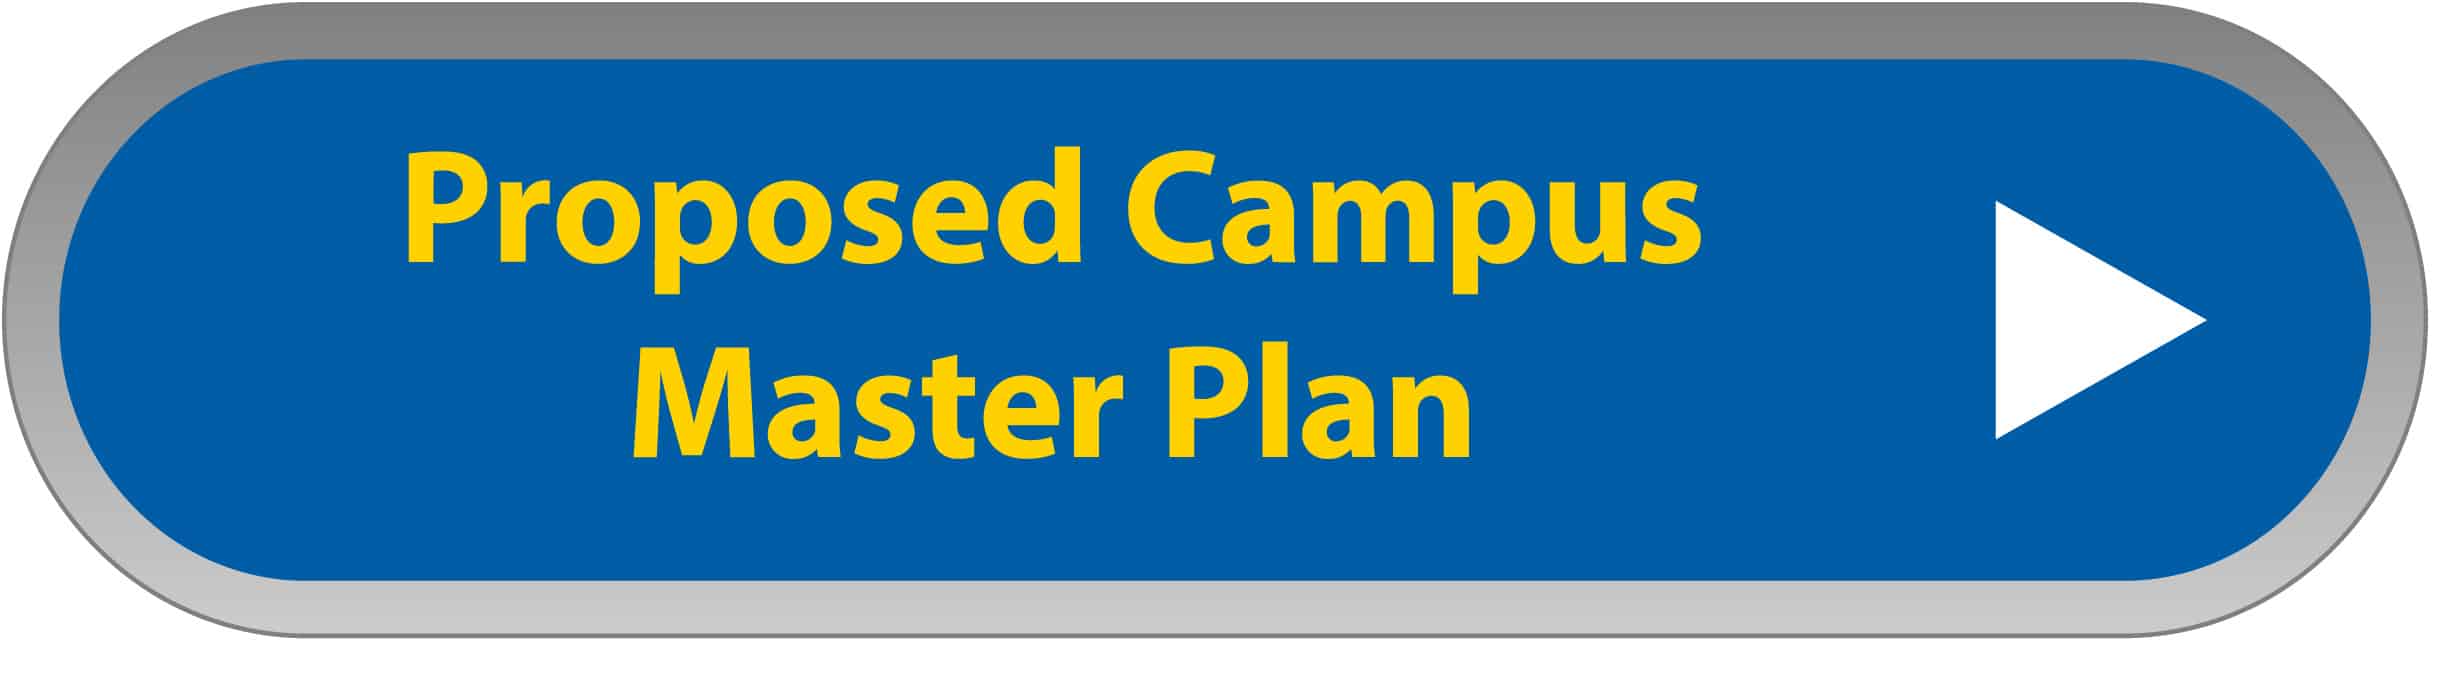 Proposed Campus Master Plan link